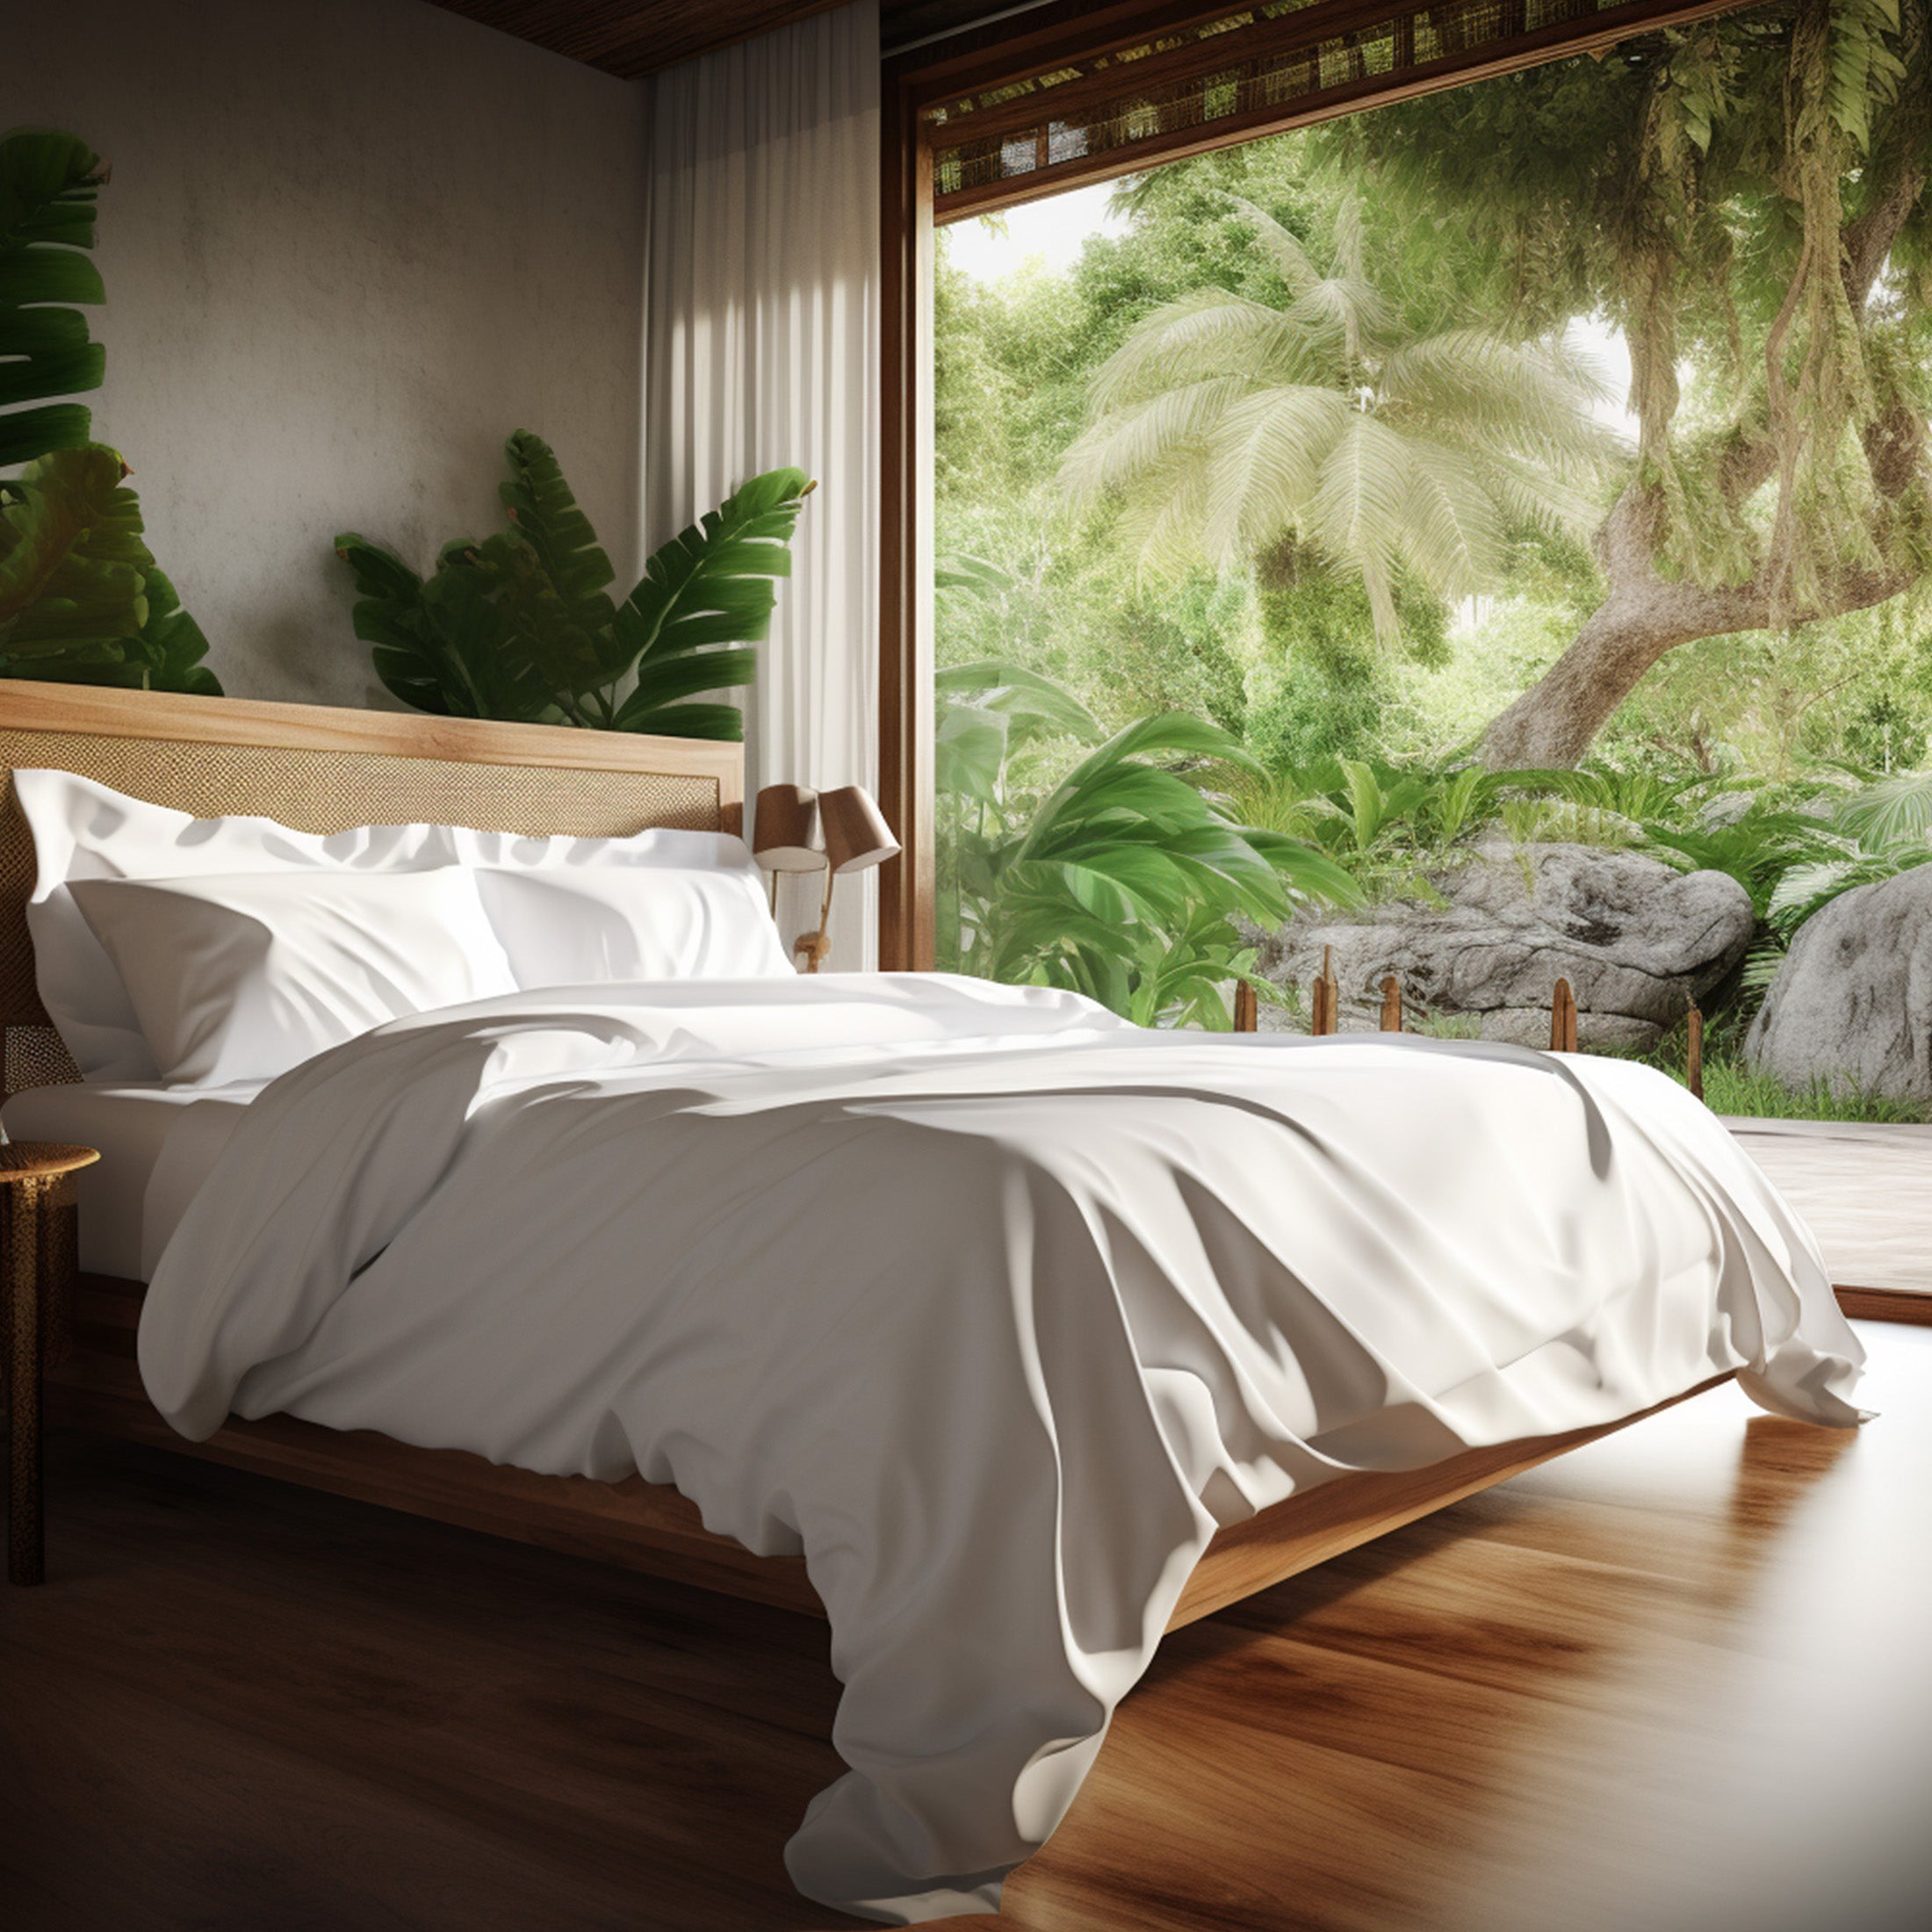 Sheet Set - Bamboo Rayon Sateen - Silky Comfort - California Design Den